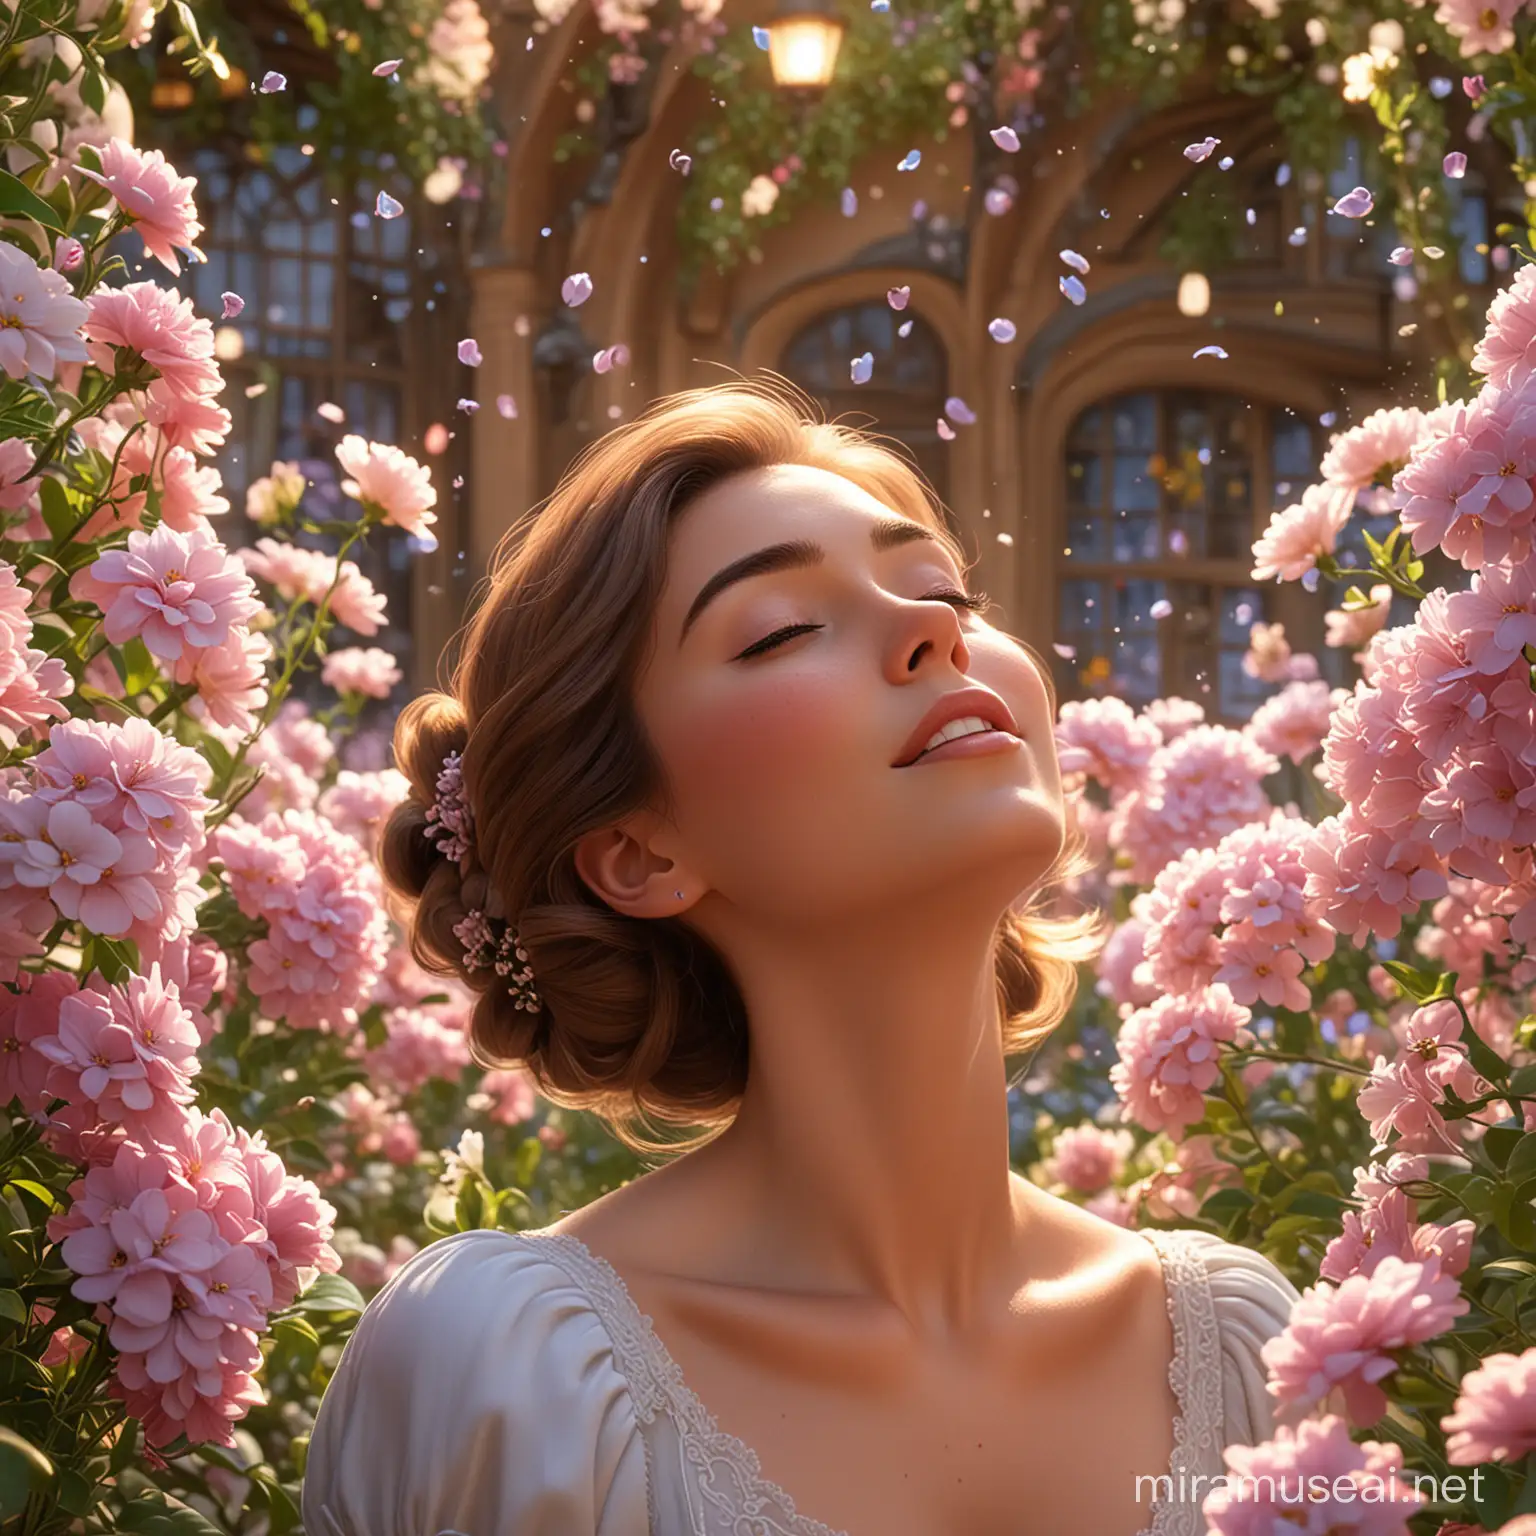 Elegant Woman Delighting in Floral Fragrance Disney Pixar Style